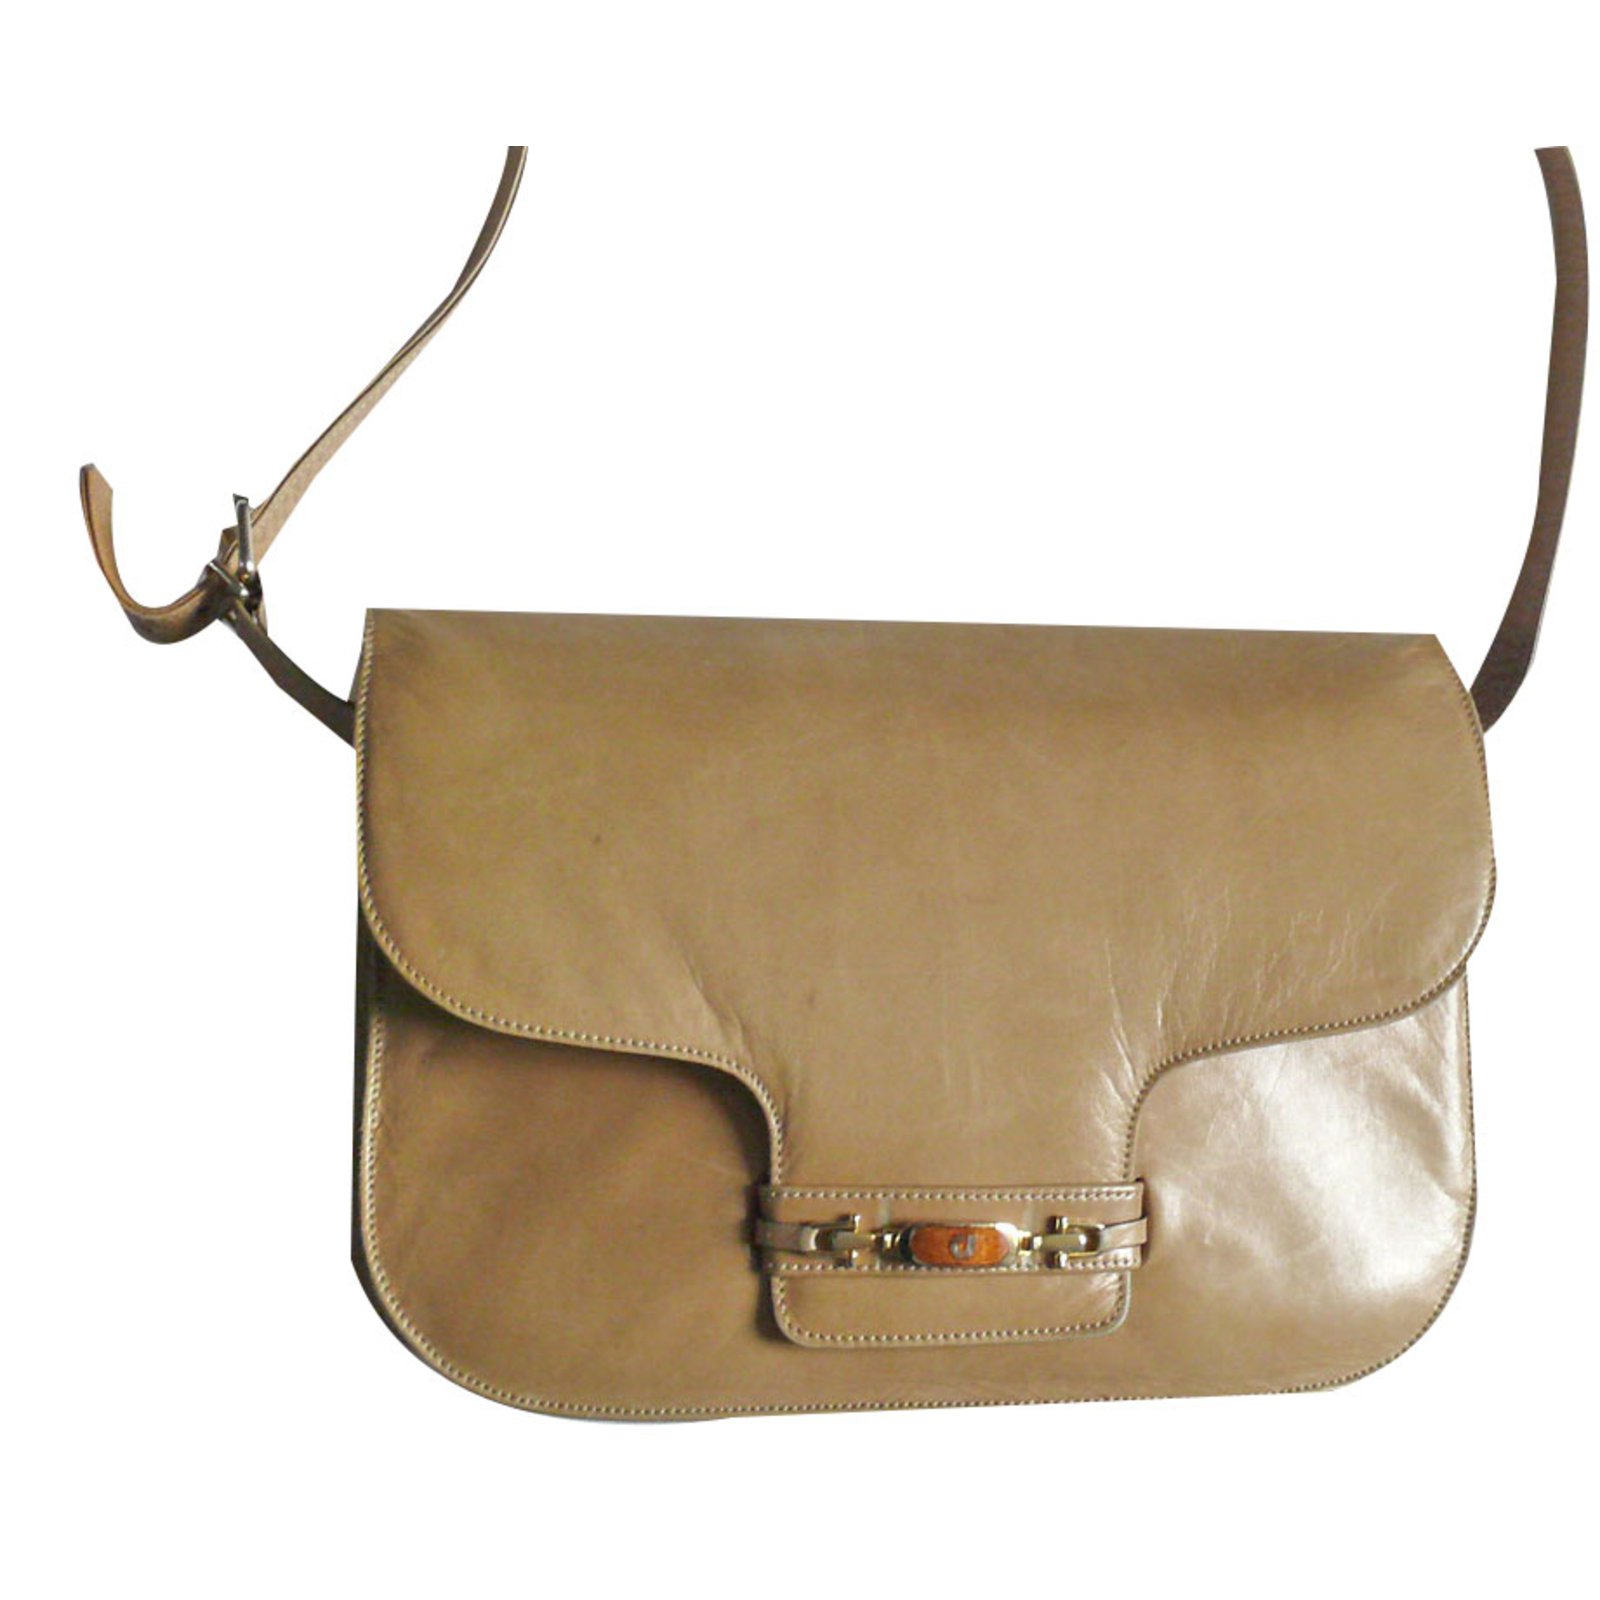 Charles Jourdan Paris, Leather purse,bag,tan, Leather, Purses, Bags, Shoulder Bag, Made in France, Clutch